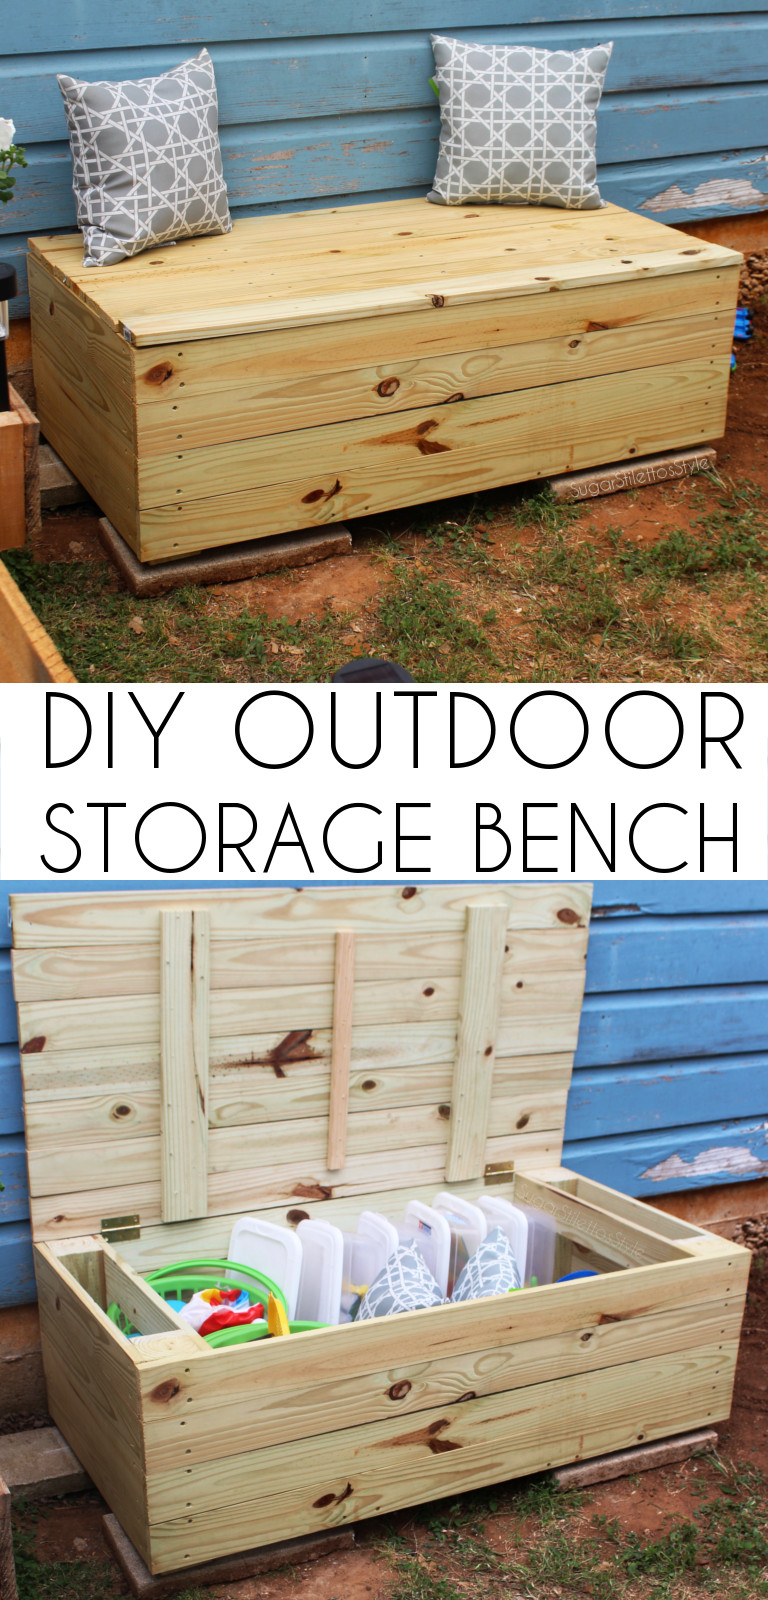 DIY Outdoor Toy Storage
 DIY Outdoor Storage Bench Outdoor Toy Box